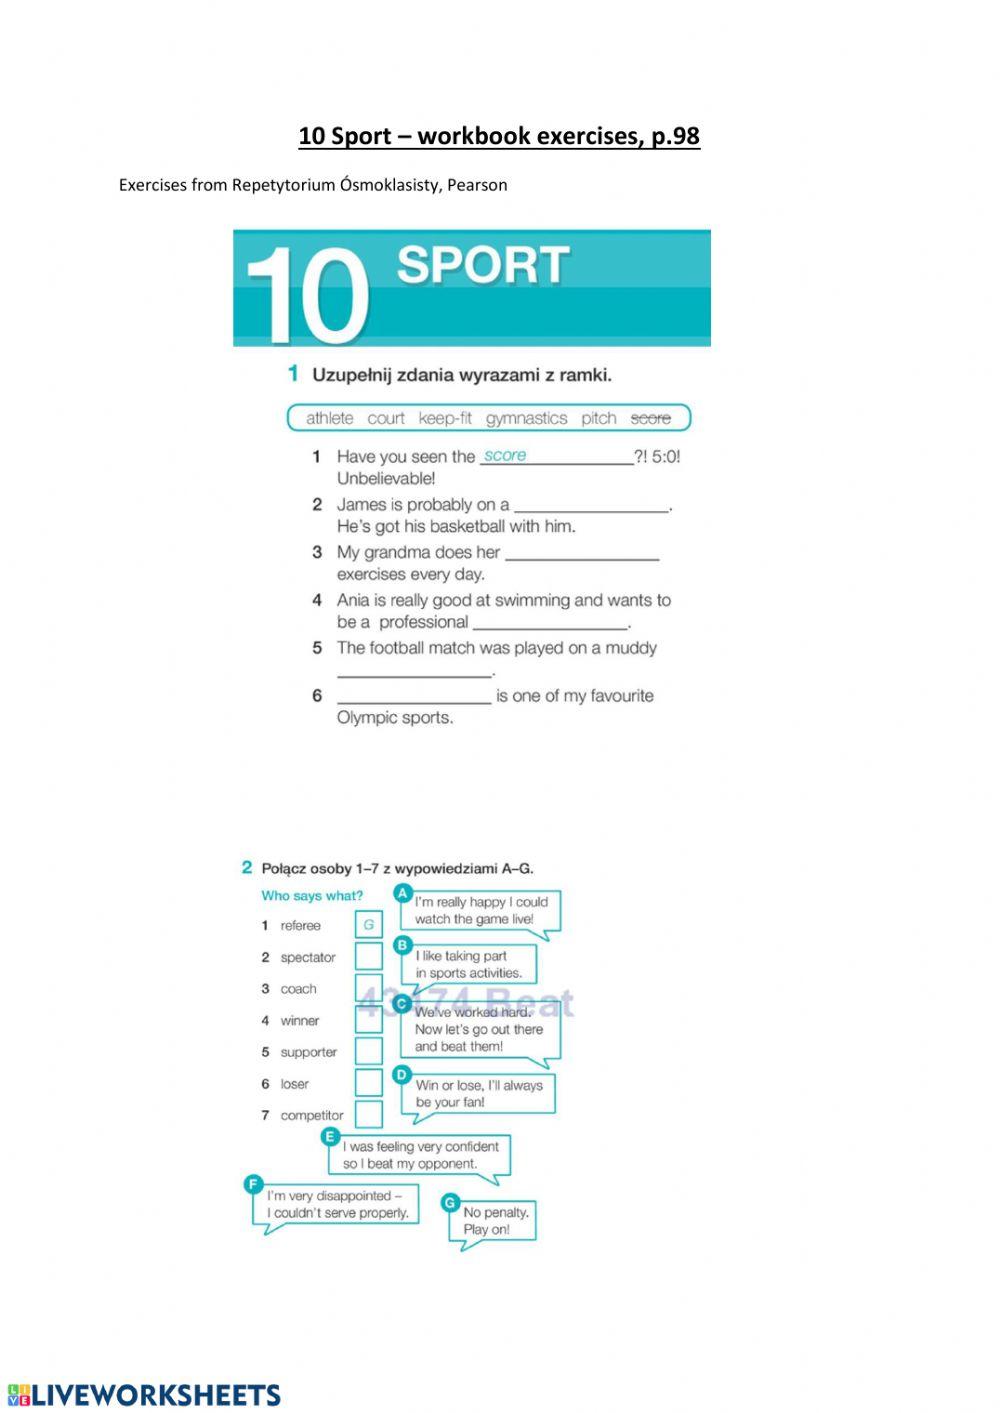 E8 Sport - workbook exercises p98